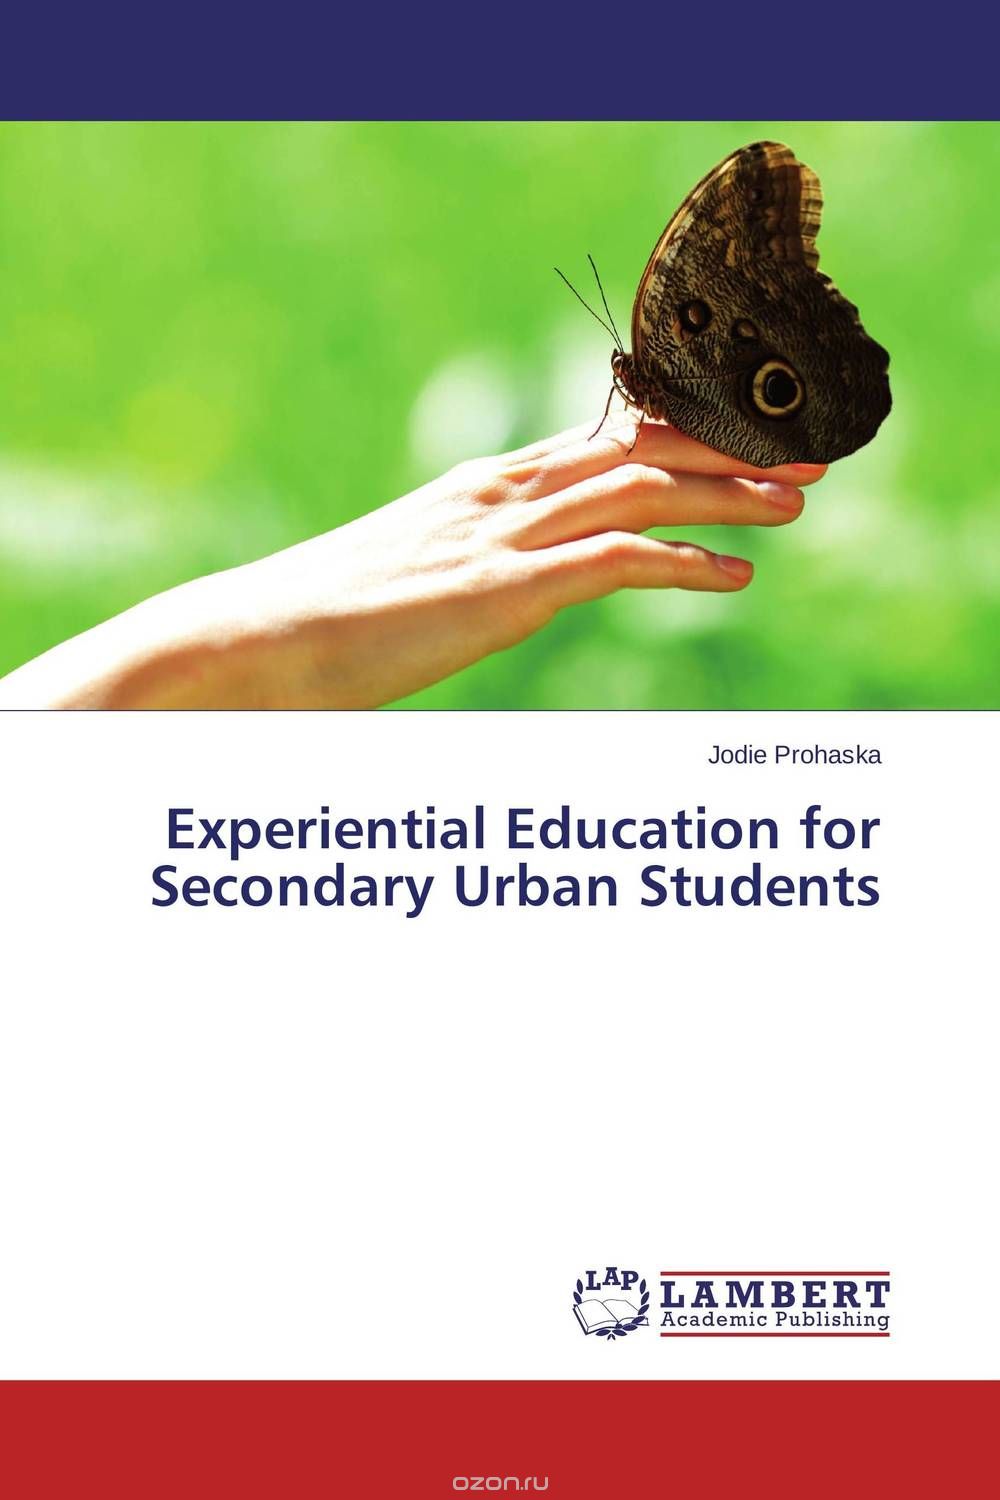 Скачать книгу "Experiential Education for Secondary Urban Students"